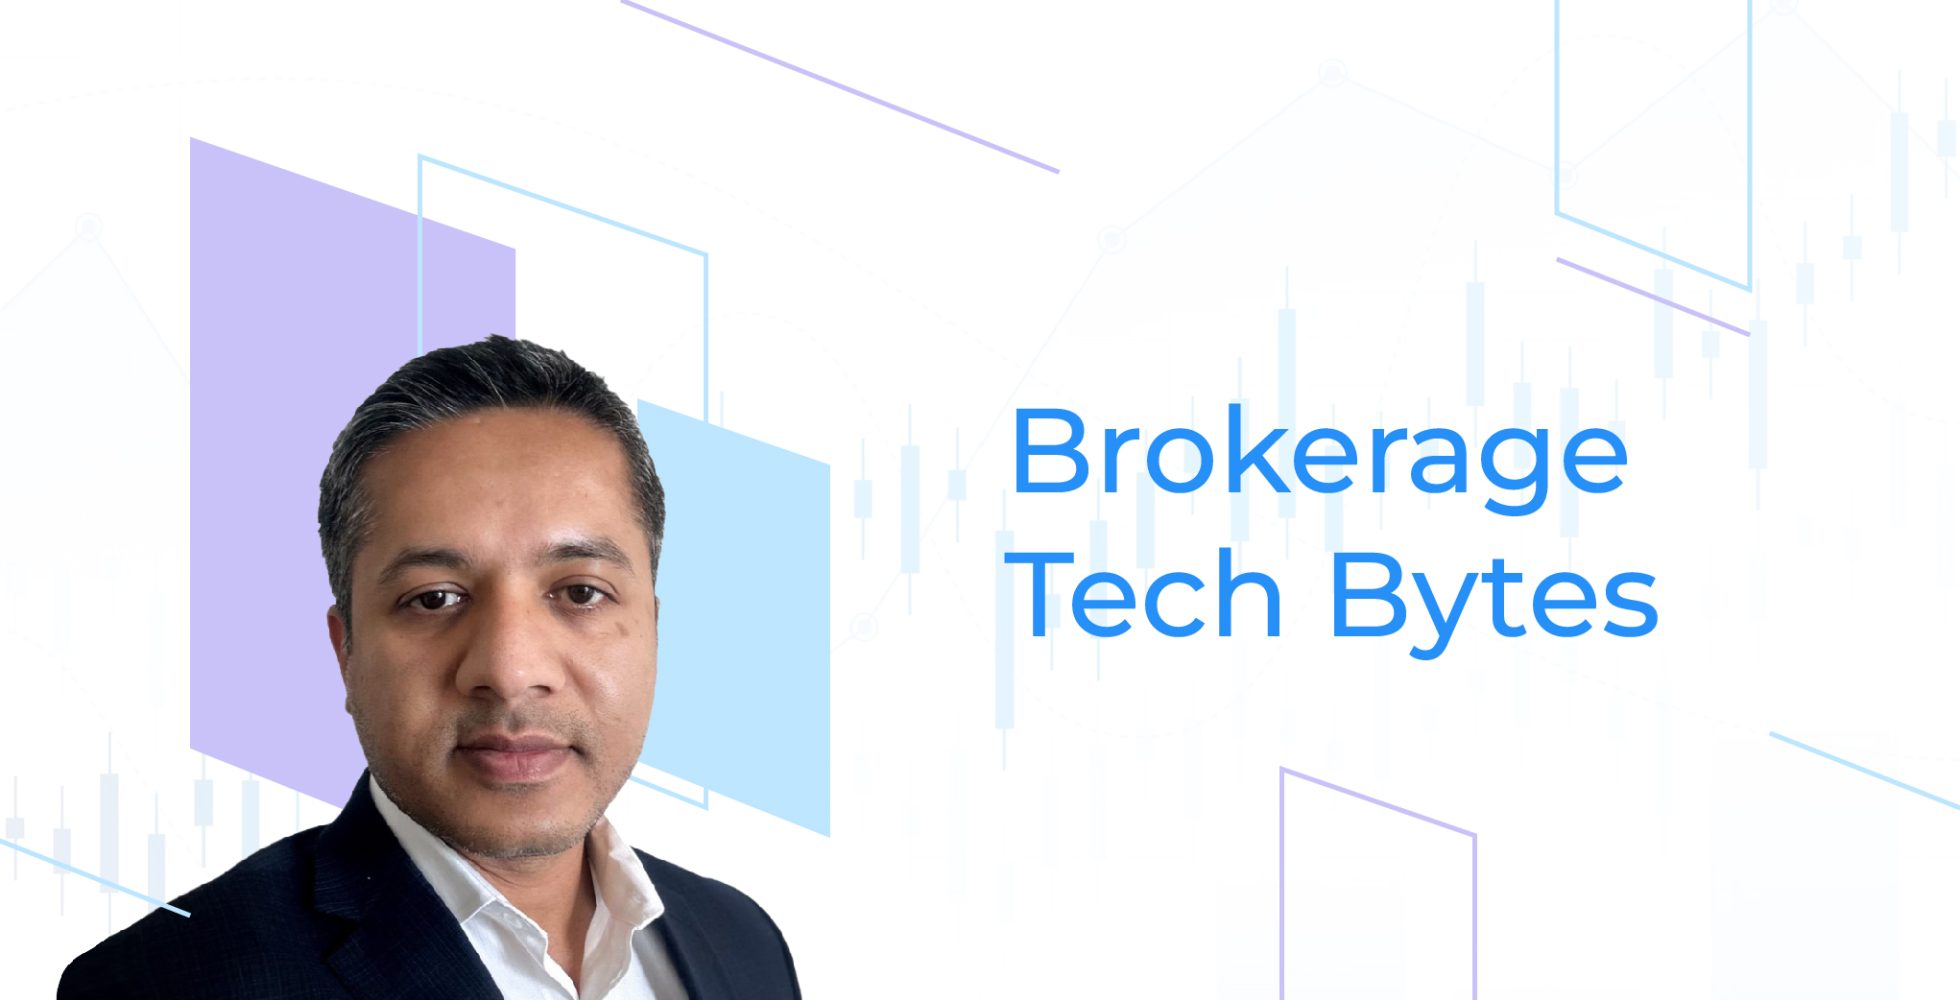 Brokerage Tech bytes